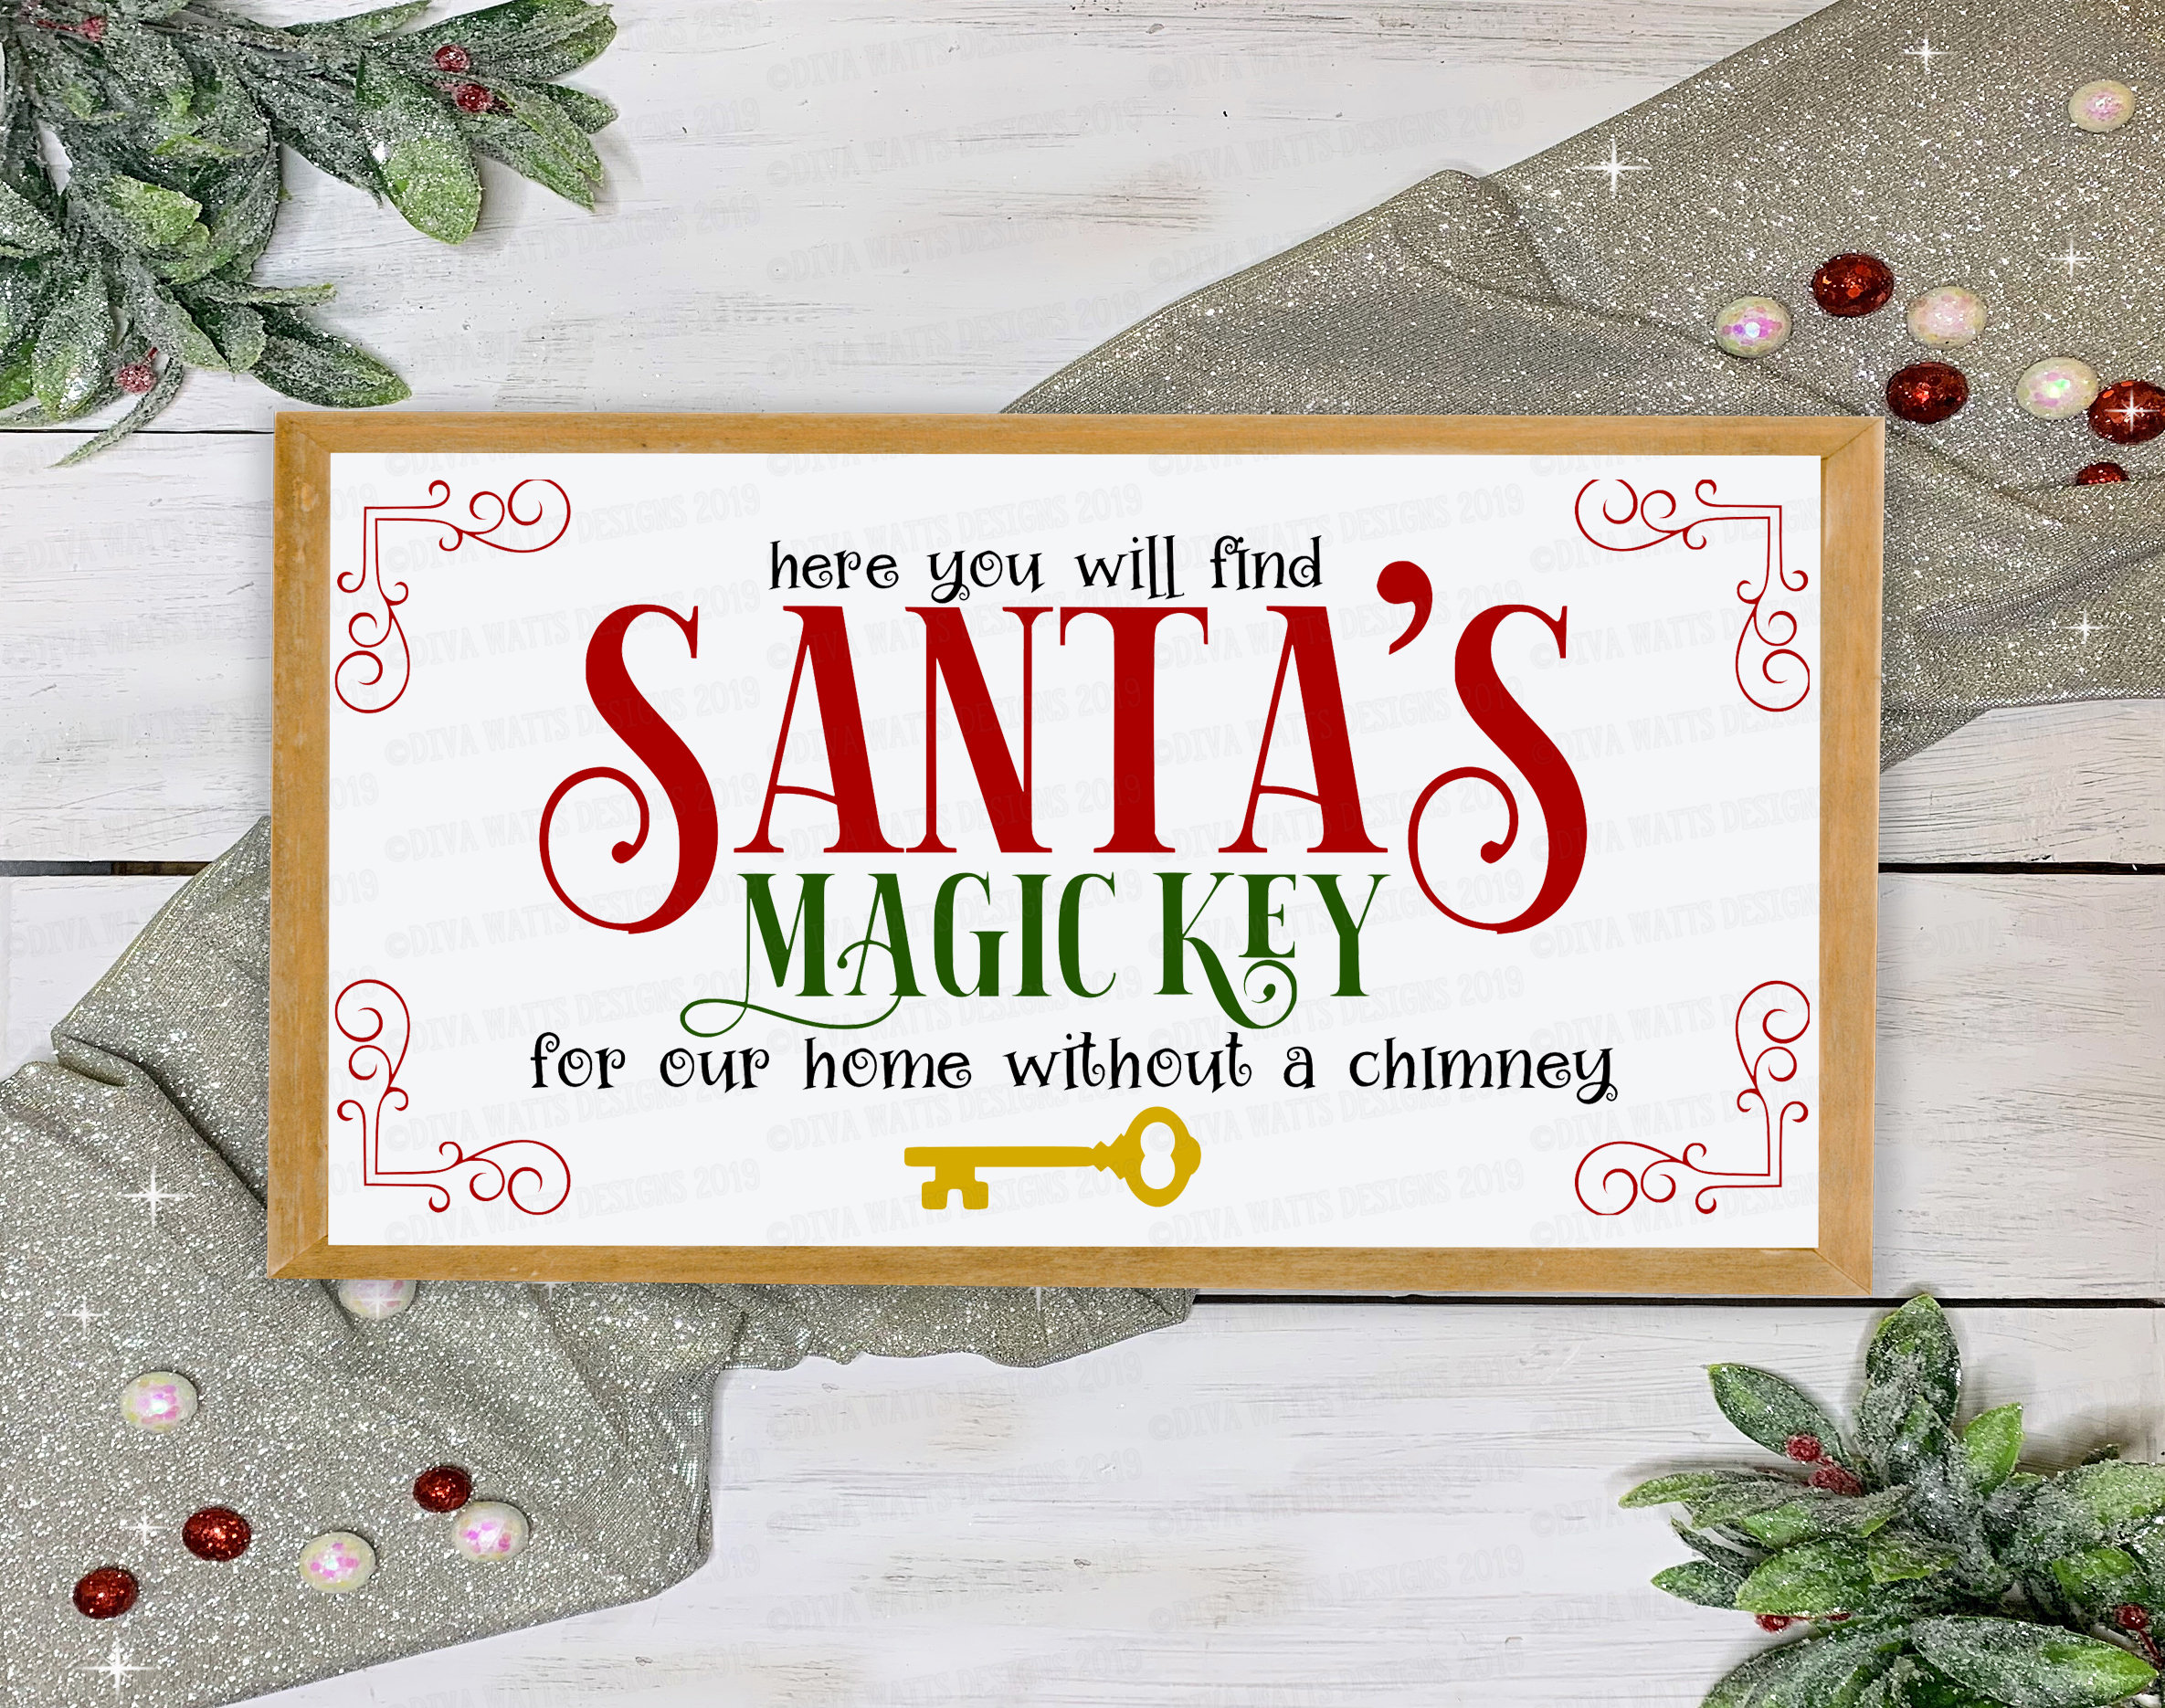 svg png Christmas Wall Decor Design Silhouette Cut File dxf Santa's Magic Key Sign; Digital Download Print File eps Cricut